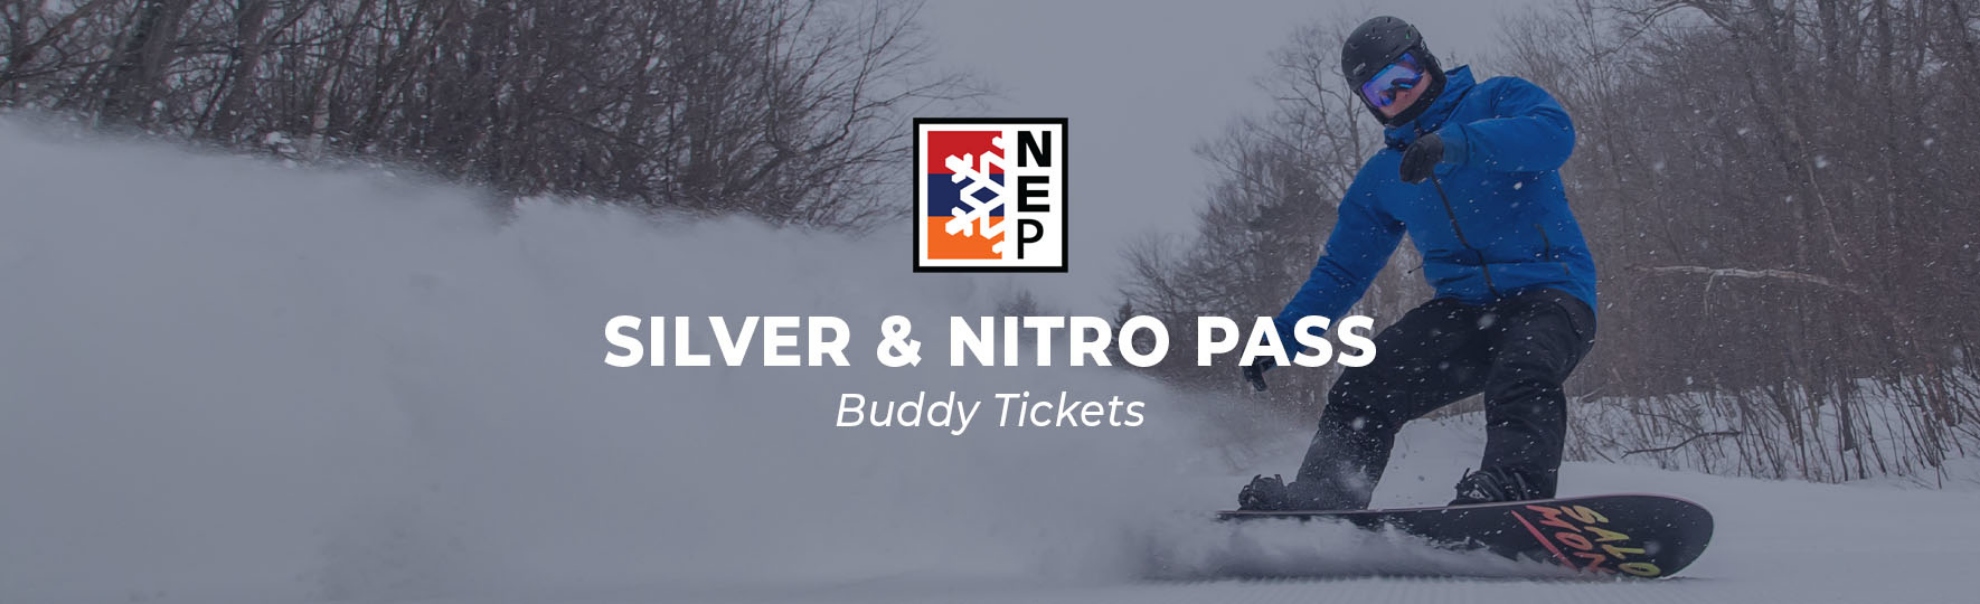 Silver & Nitro Pass Buddy Tickets